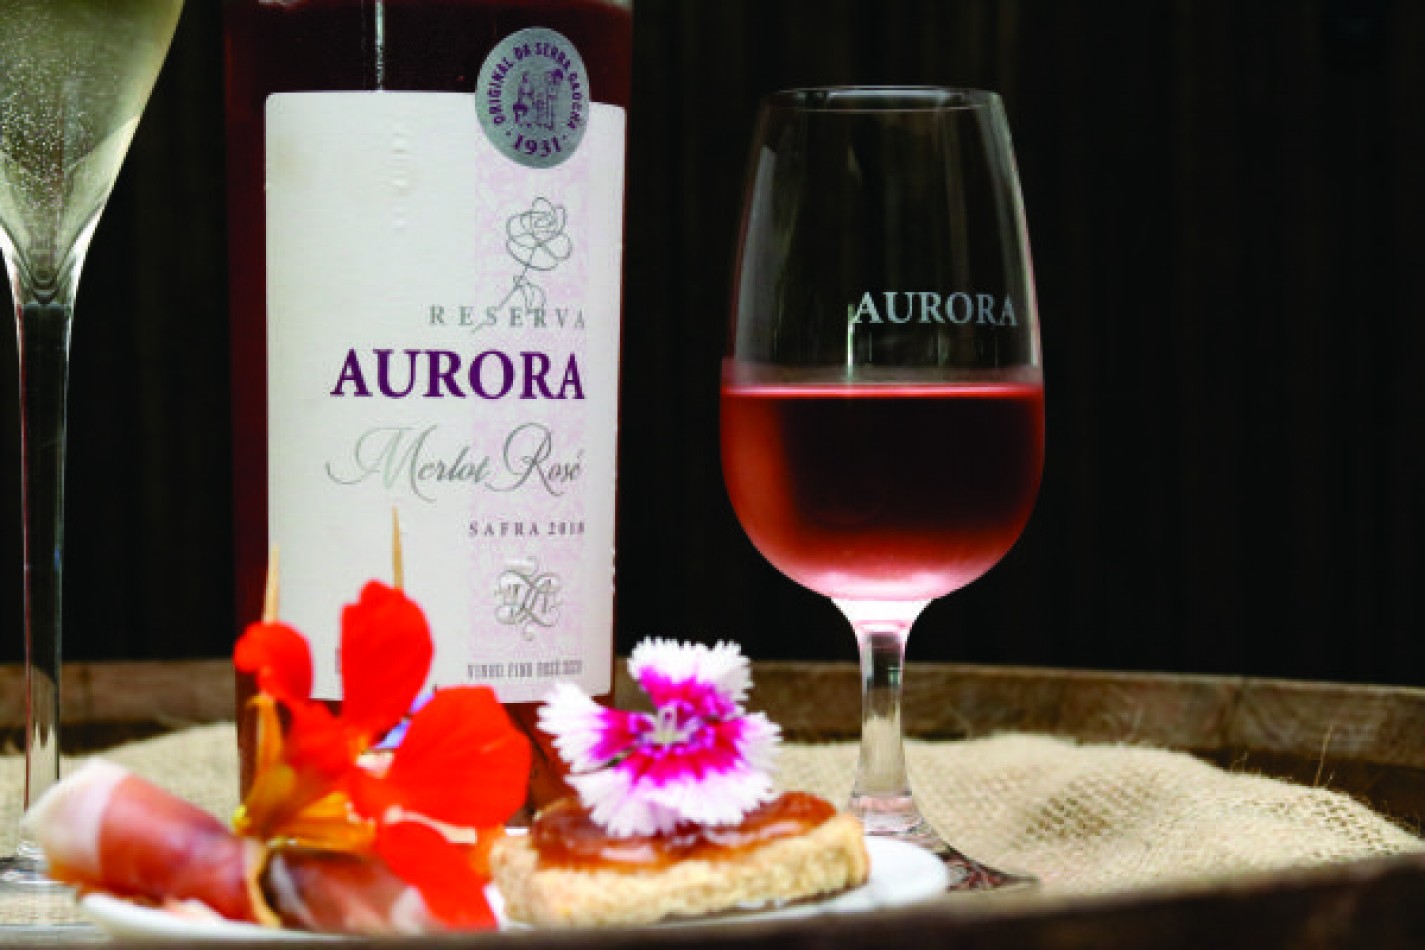 Vinícola Aurora brinda o “Iguatemi Wine” com seus rótulos premiados